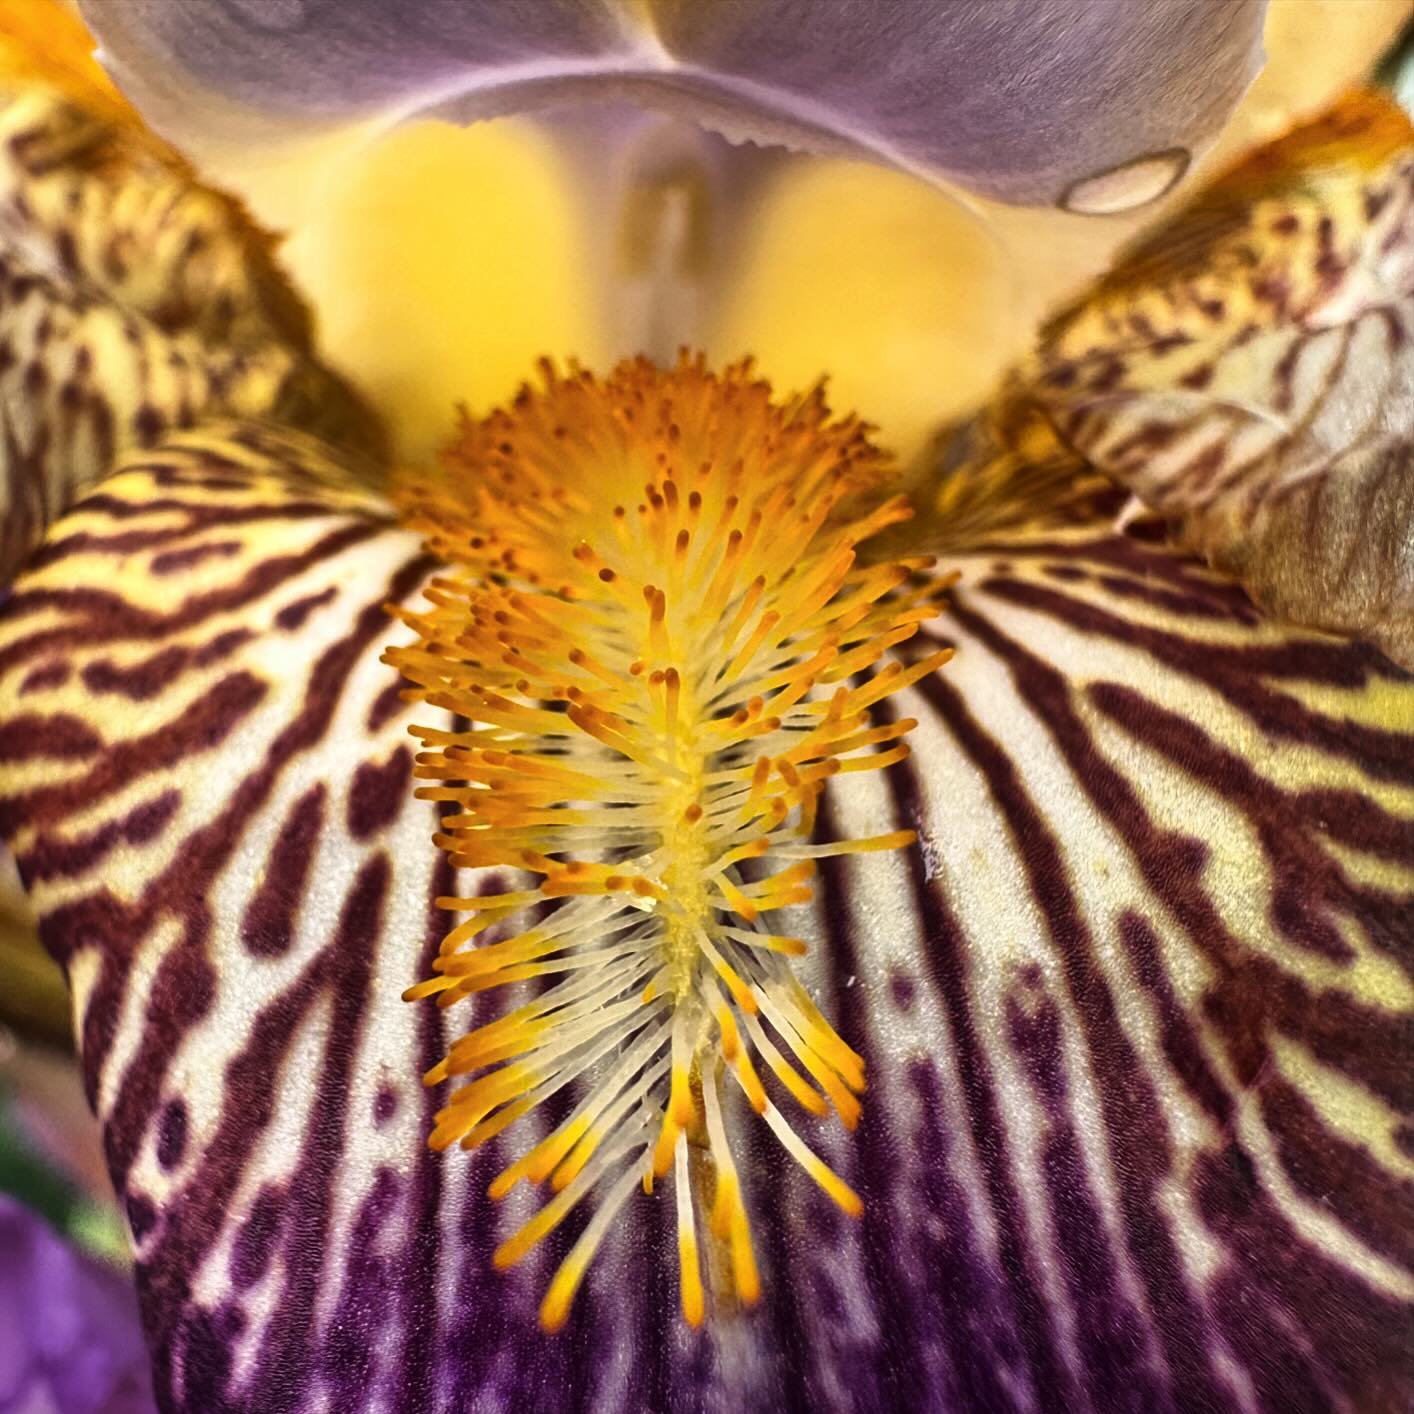 Getting up close with an Iris #flowers #flowerphotography #iris #macrophotography #macro #iphonephotography #exposureonestudios #springflowers #flora #flowerstagram #flowerpower